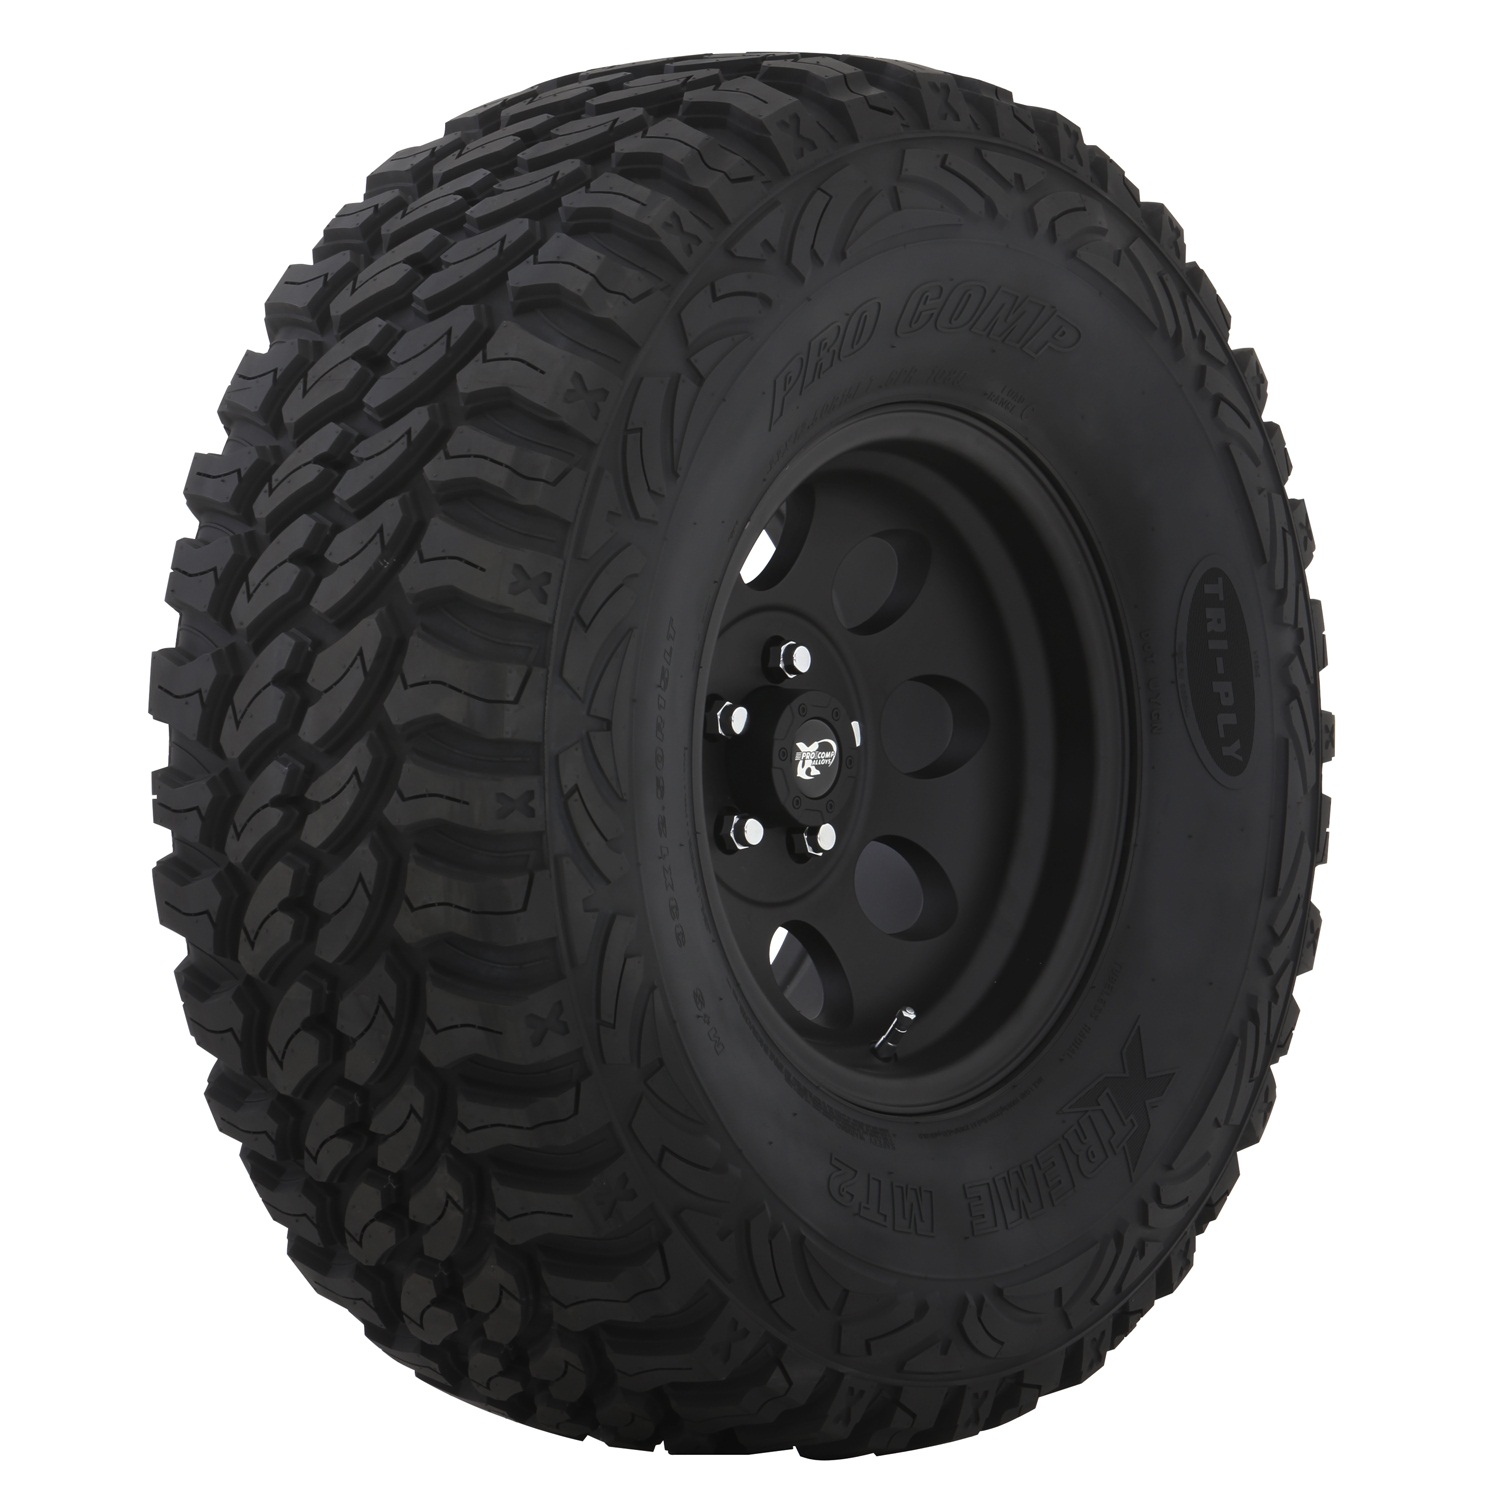 Pro Comp Tires Pro Comp Tires 75033 Pro Comp Xtreme Mud Terrain 2; Tire